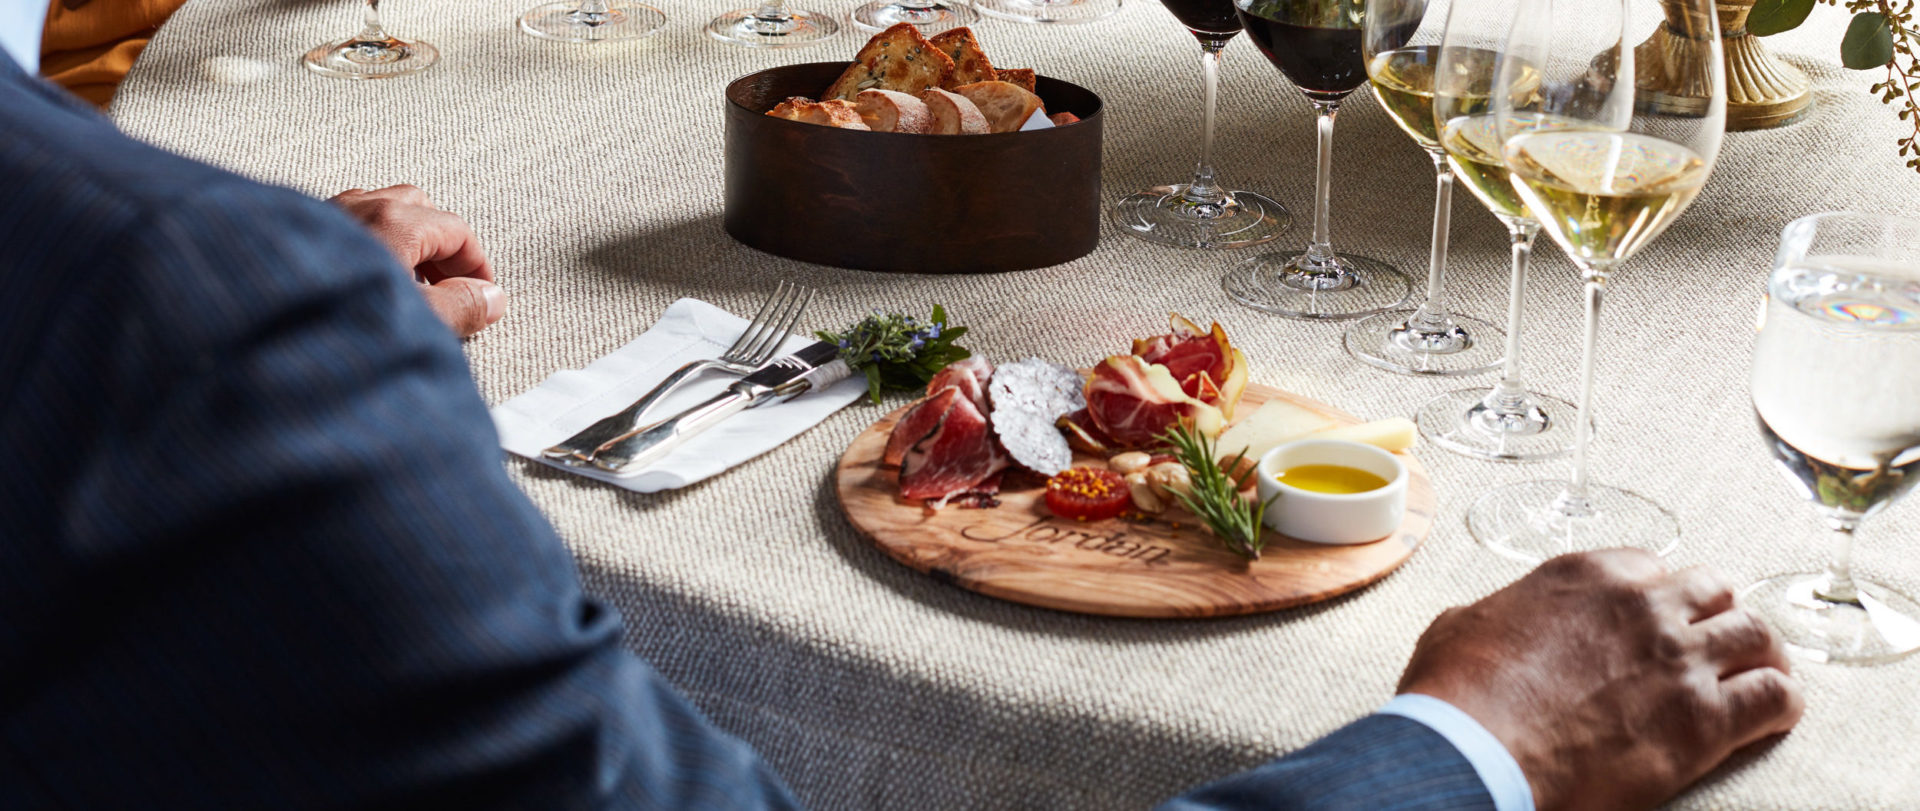 Person enjoying artisanal salumi and cheeses paired Jordan Cabernet Sauvignon and Jordan Chardonnay at a table